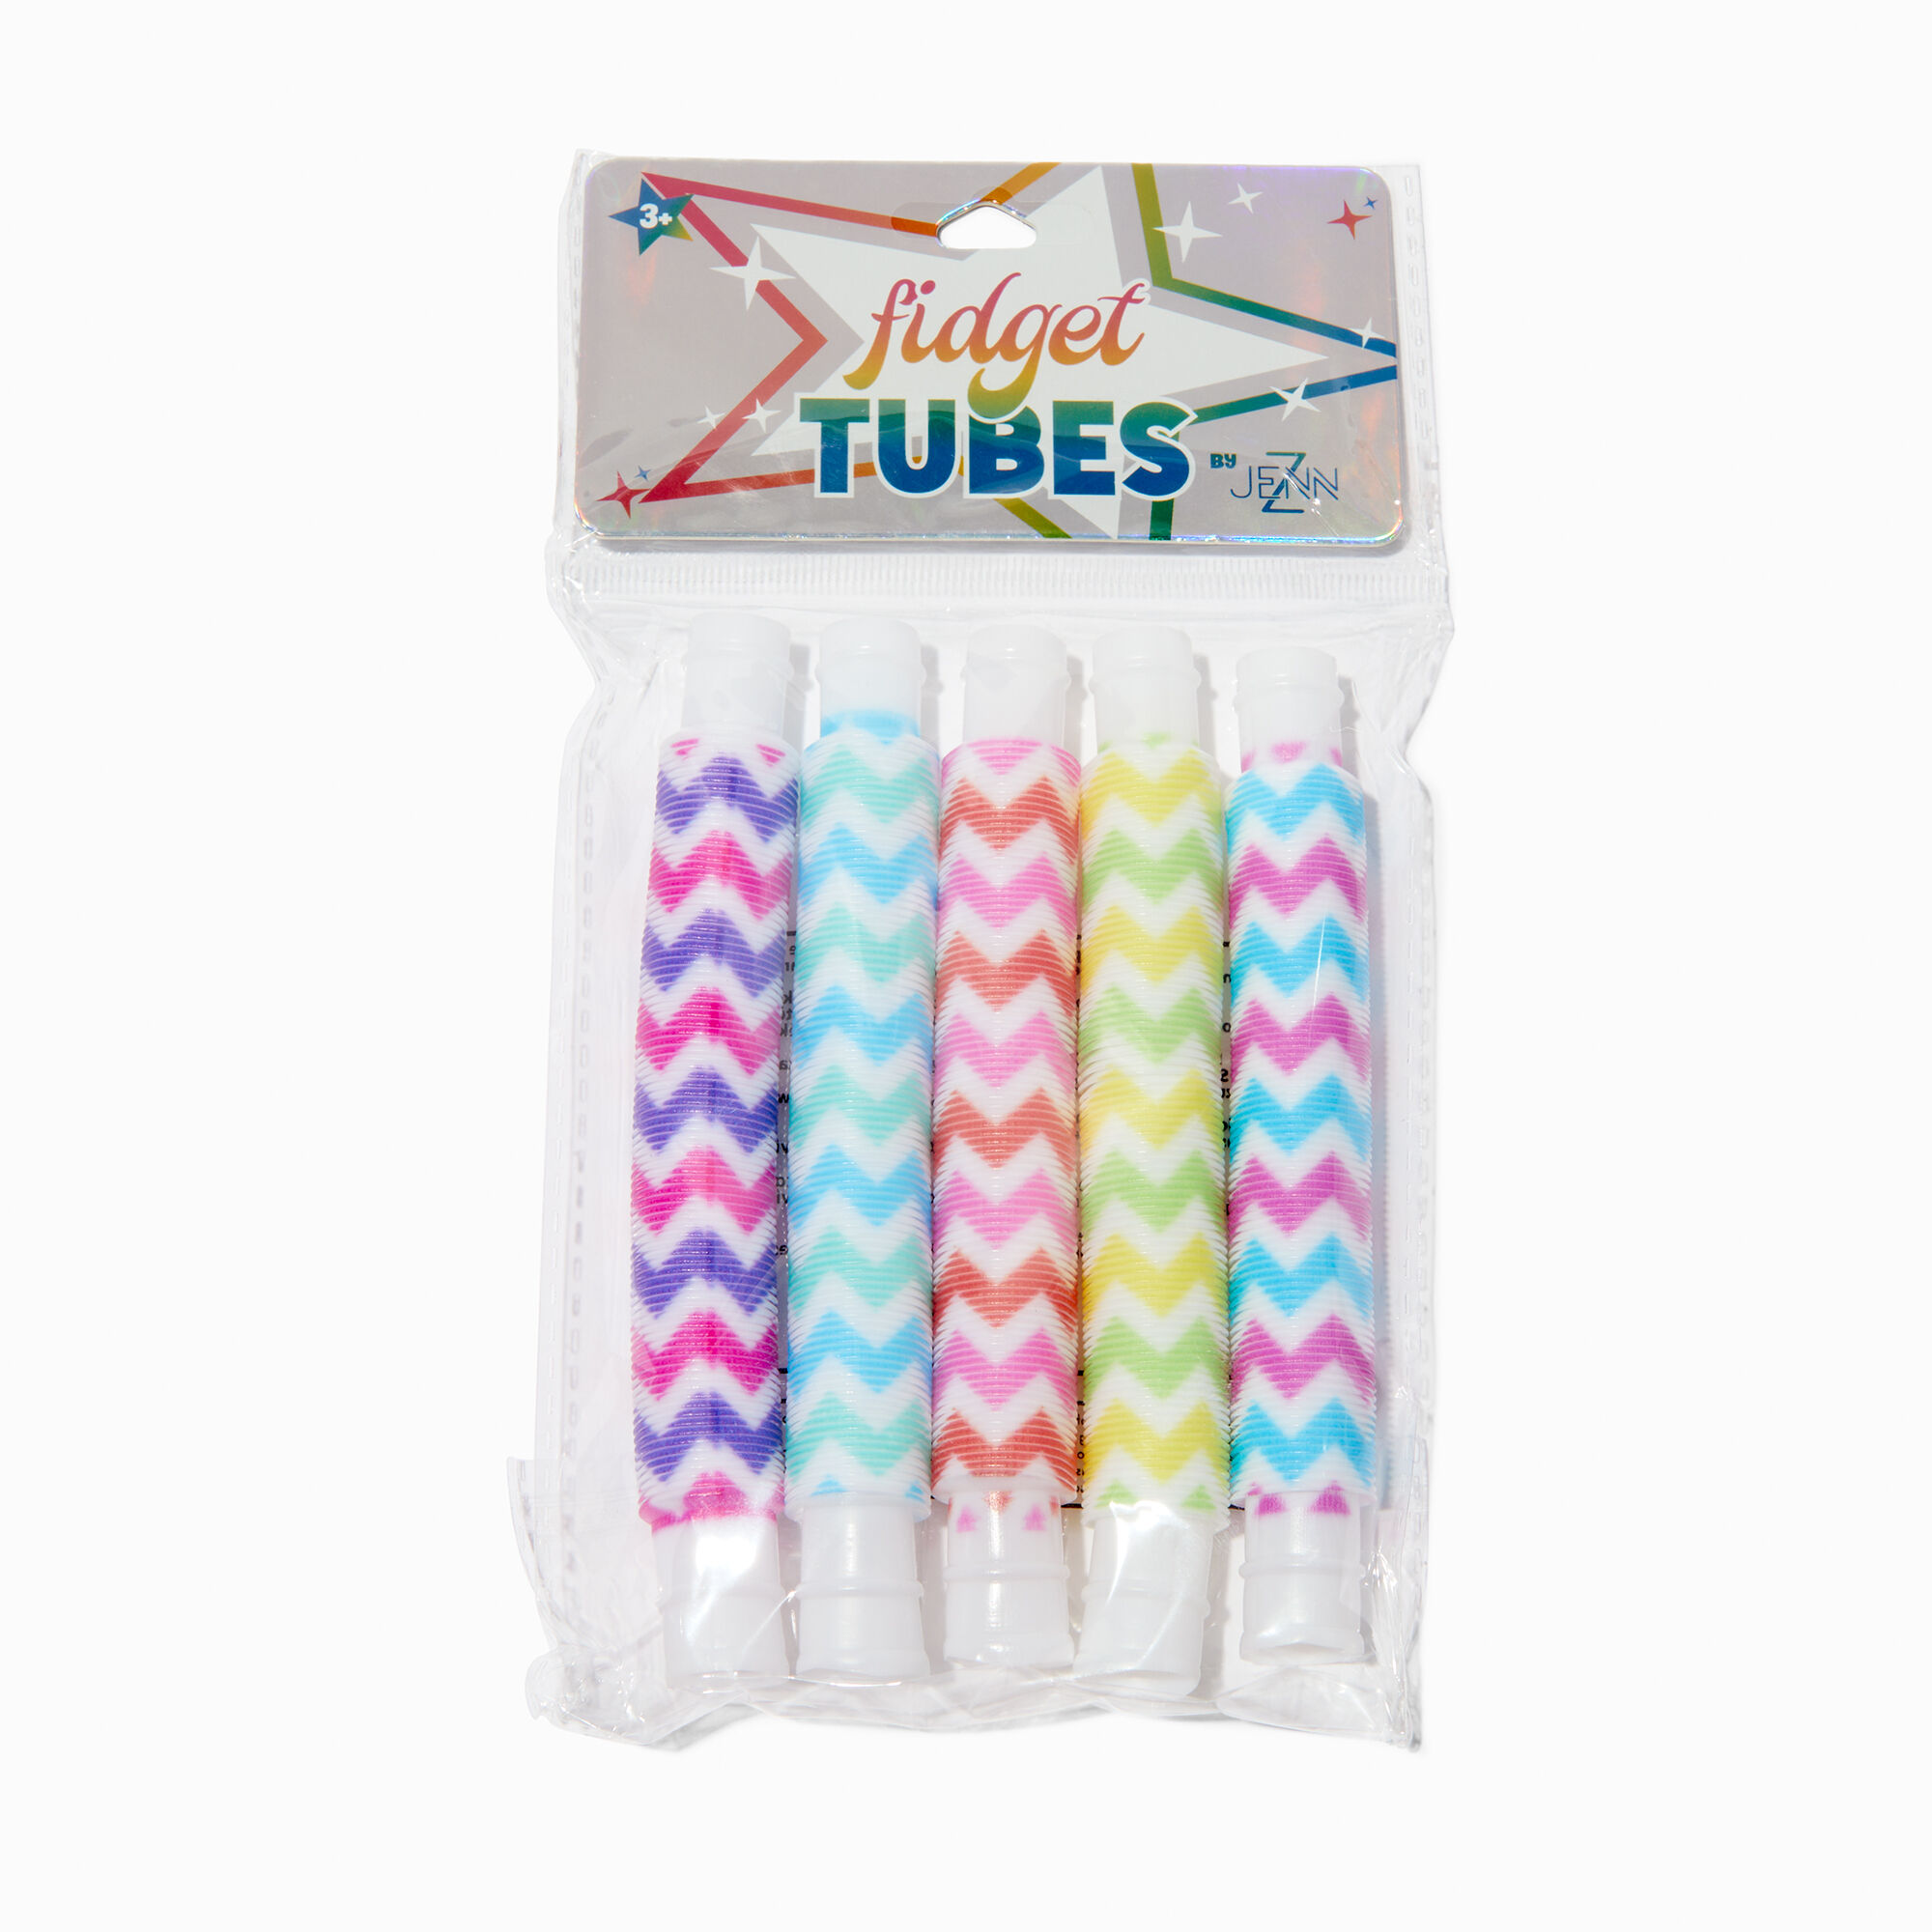 View Claires Zigzag Fidget Tubes Toy Set 5 Pack information